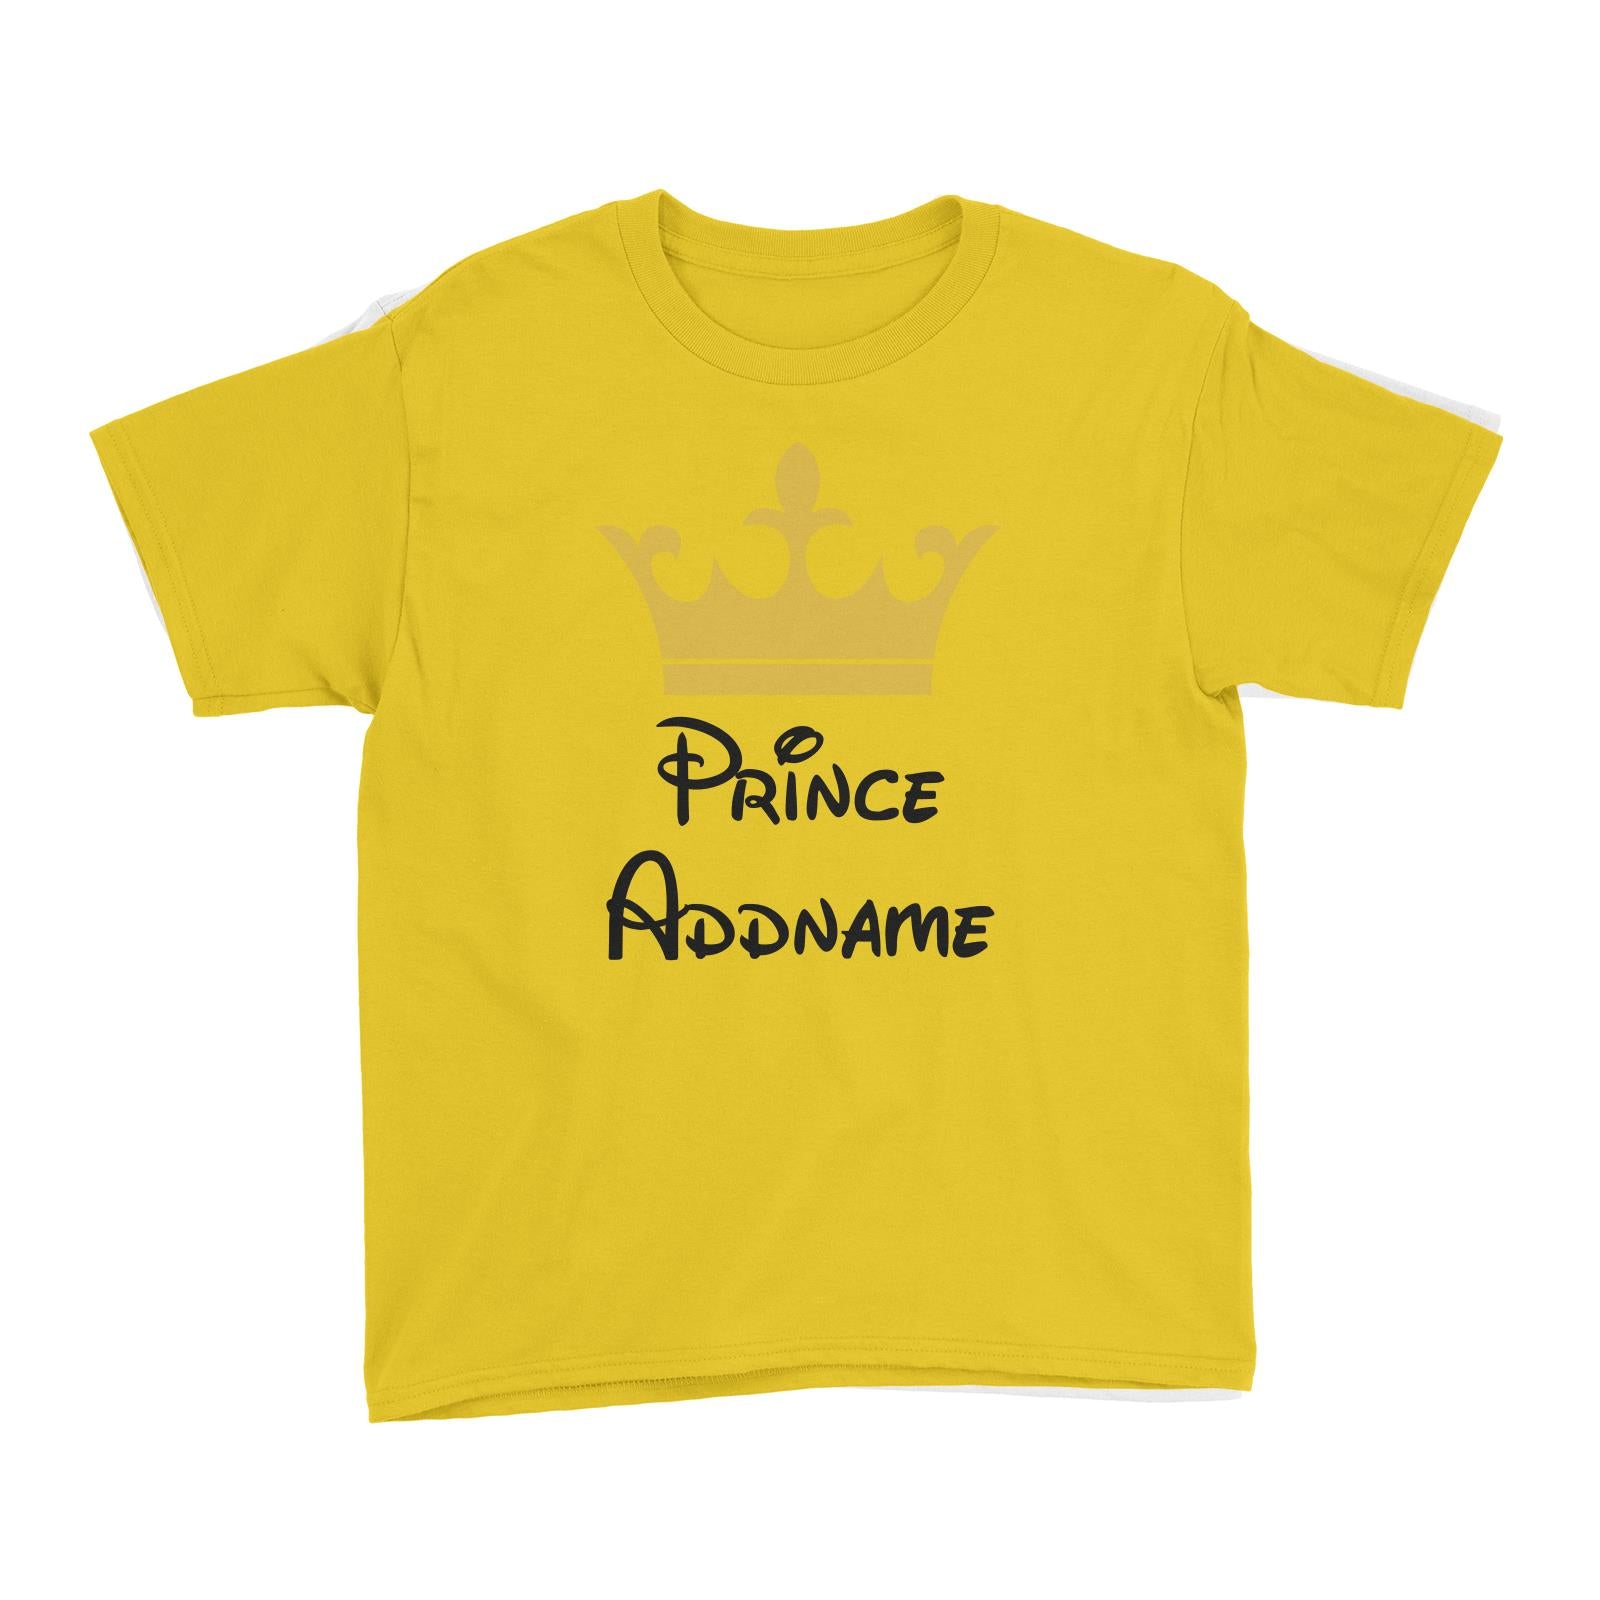 Royal Prince with Crown Addname Kid's T-Shirt